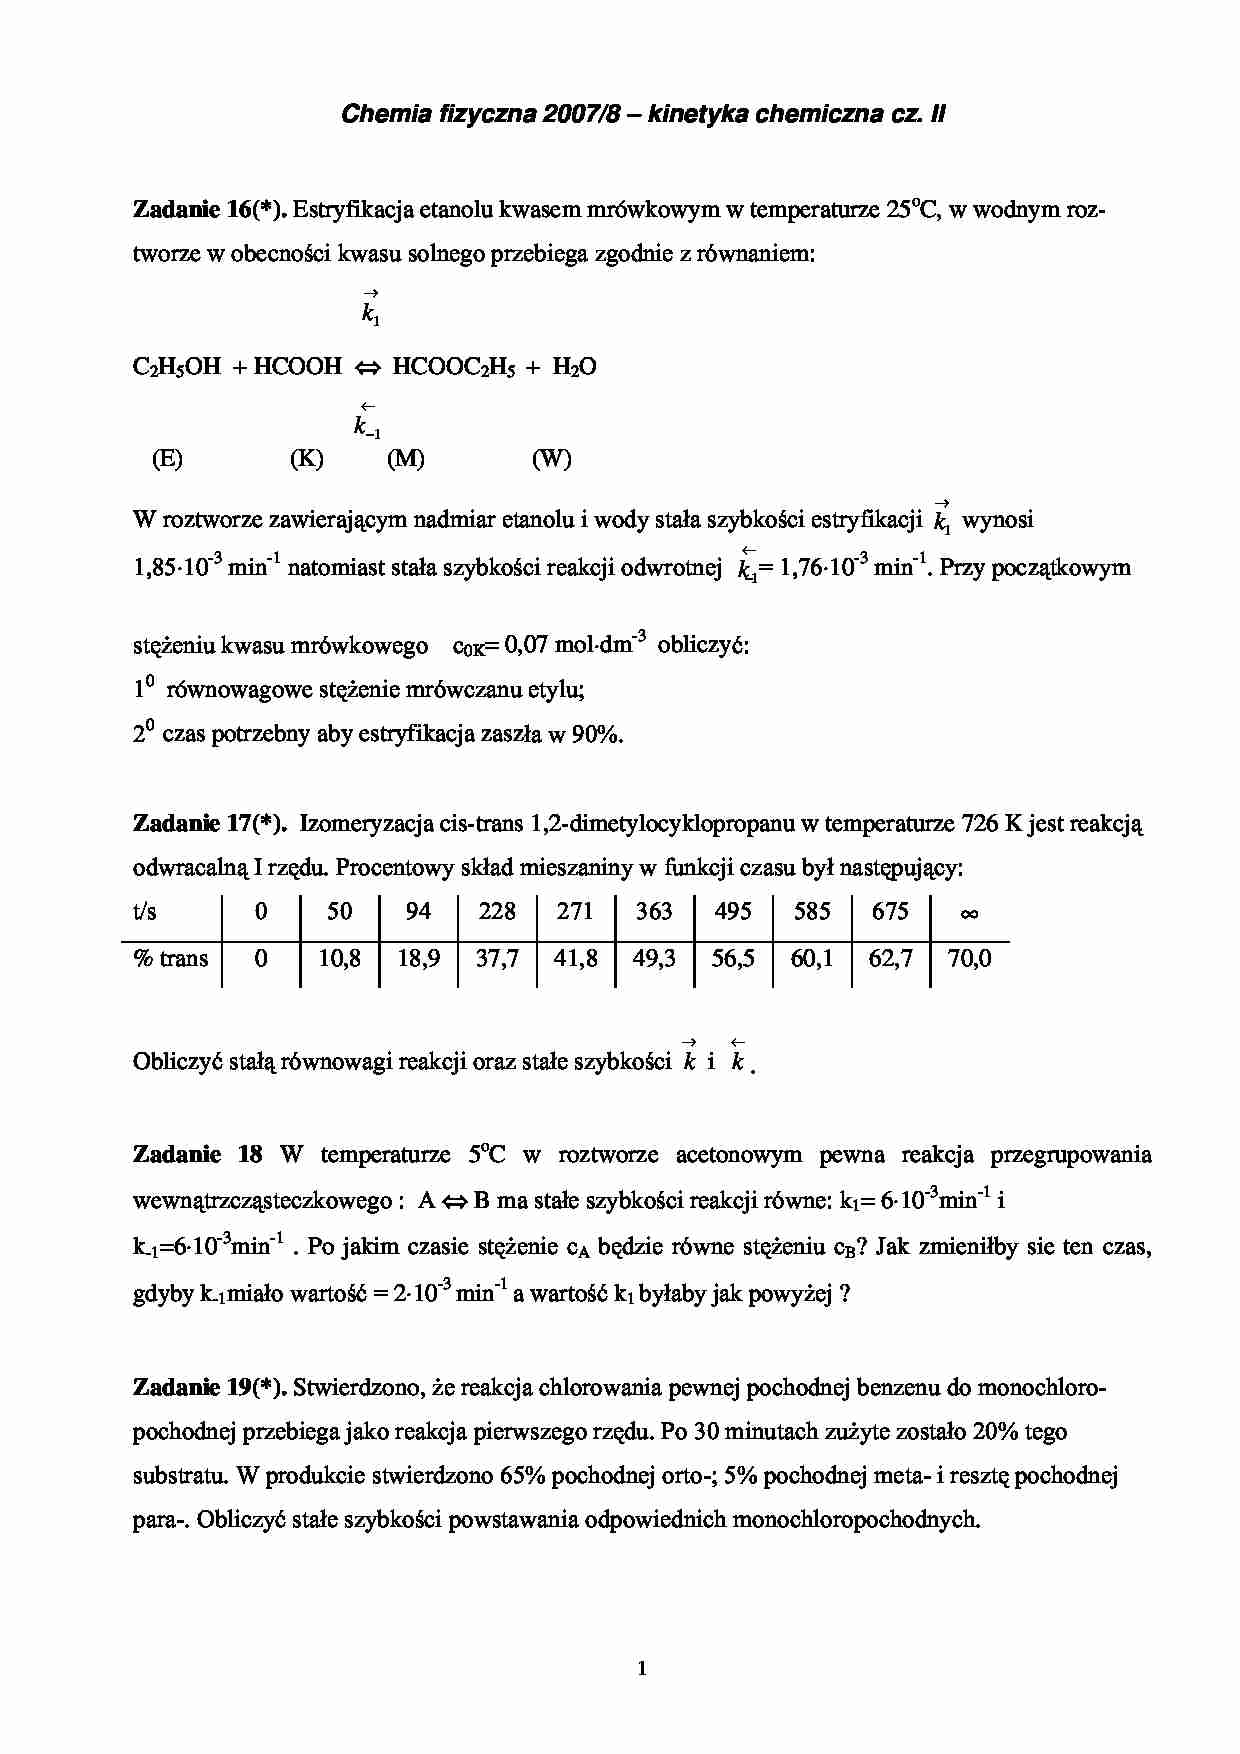 Kinetyka chemiczna - kolokwium - strona 1